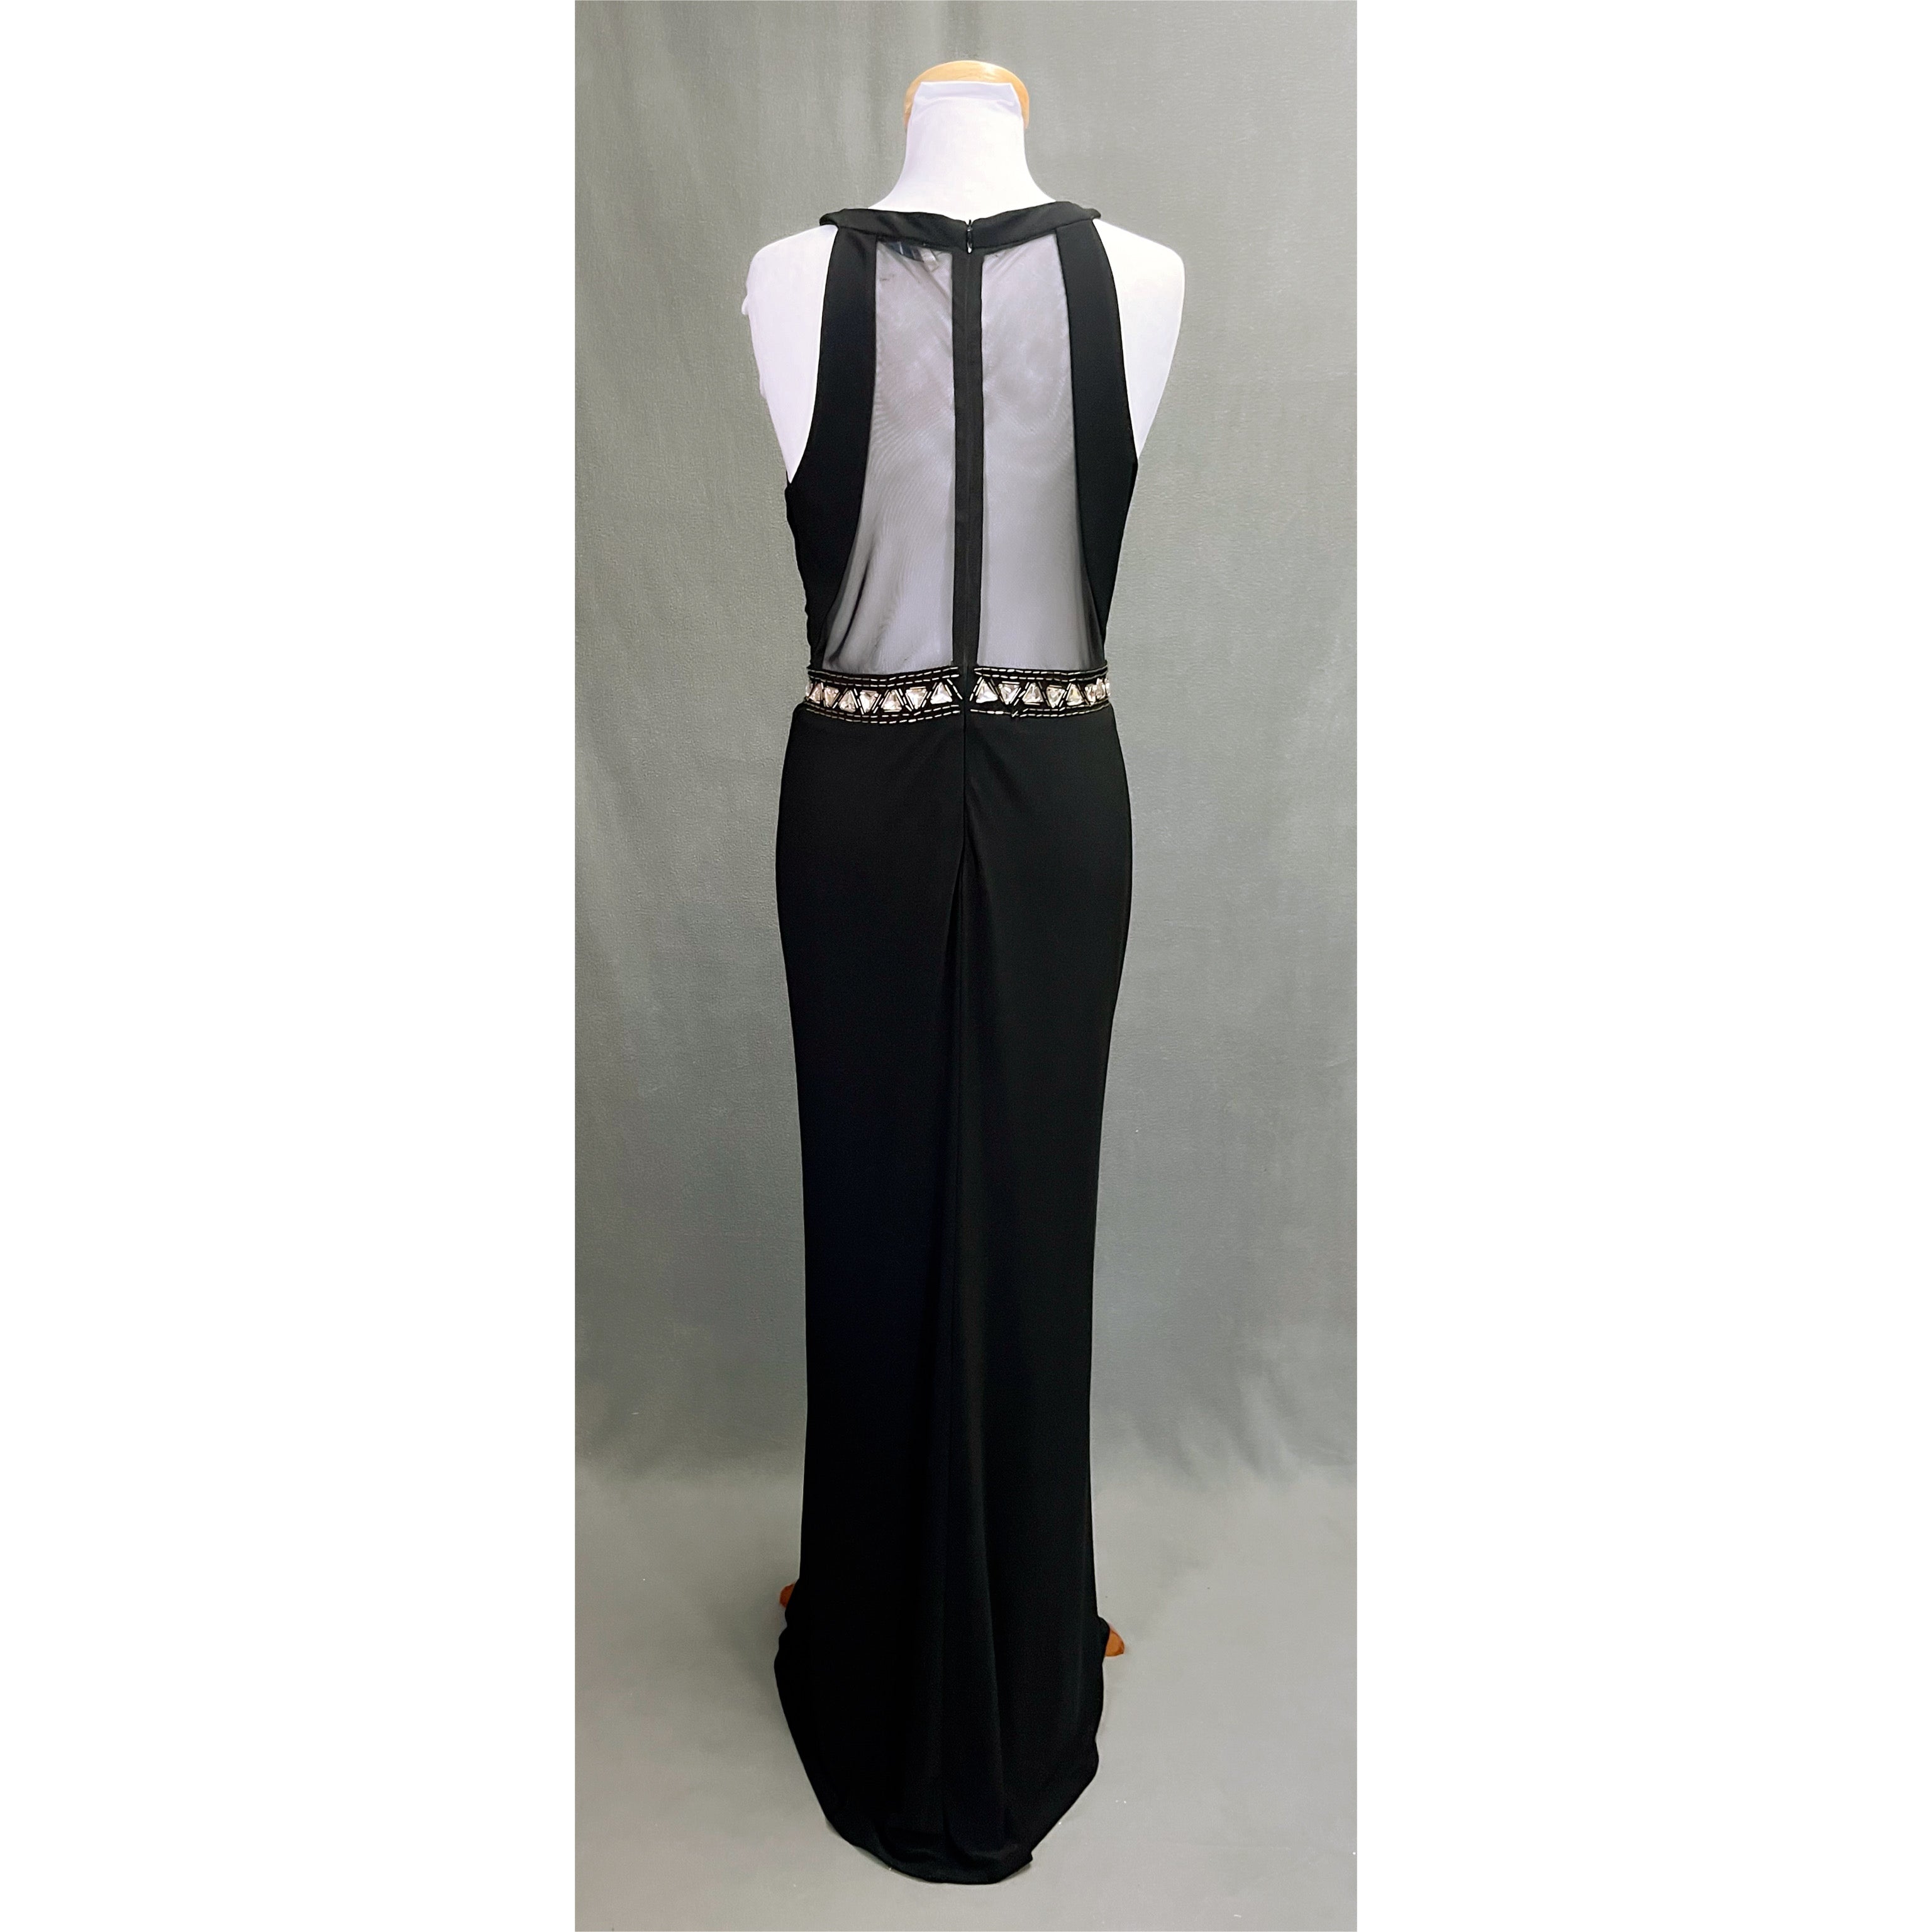 Patra black dress, size 12